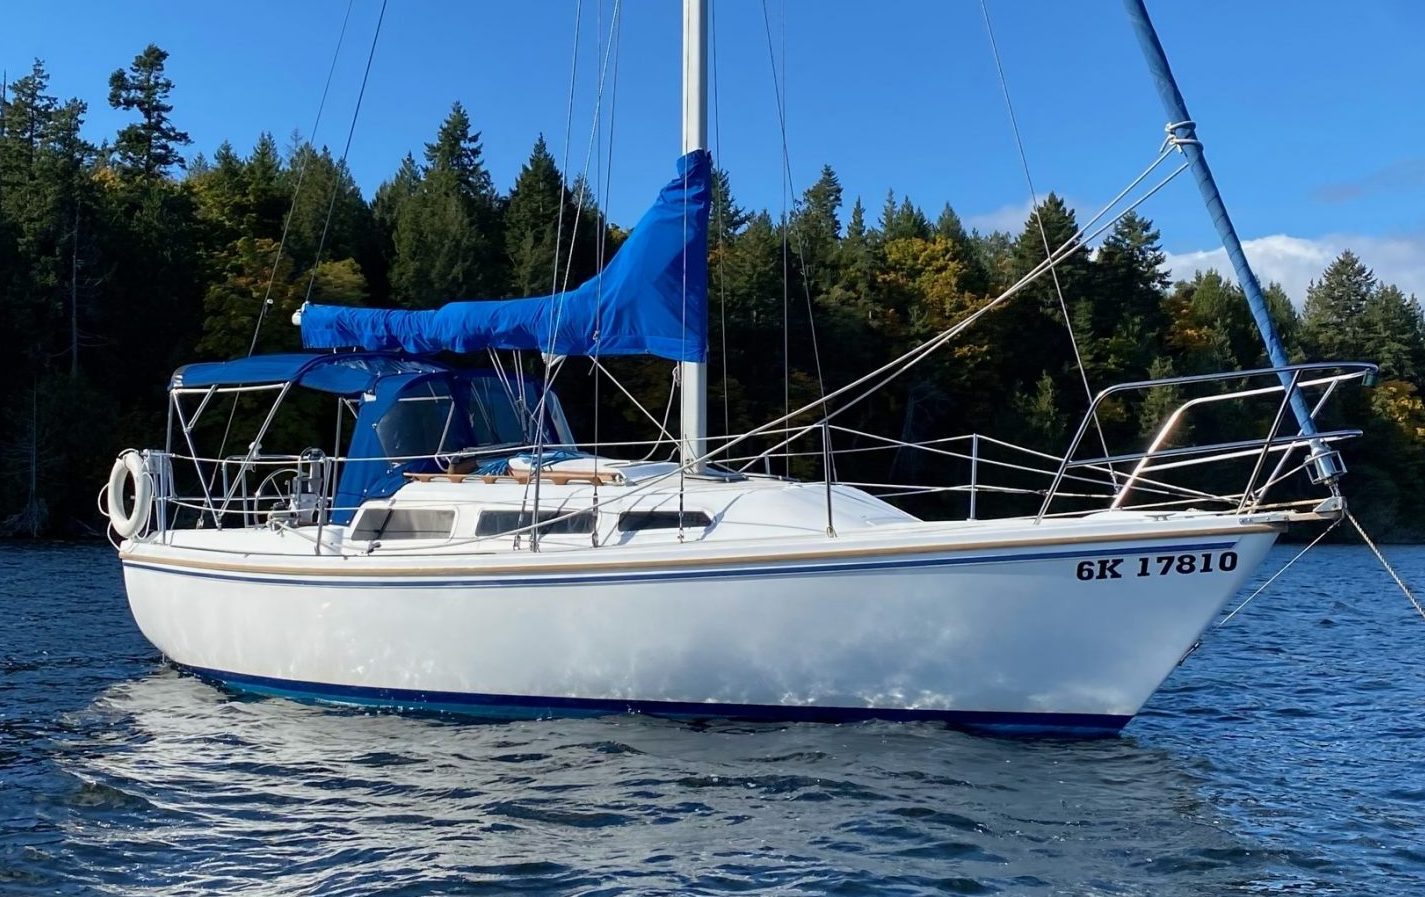 27 foot catalina sailboat for sale california